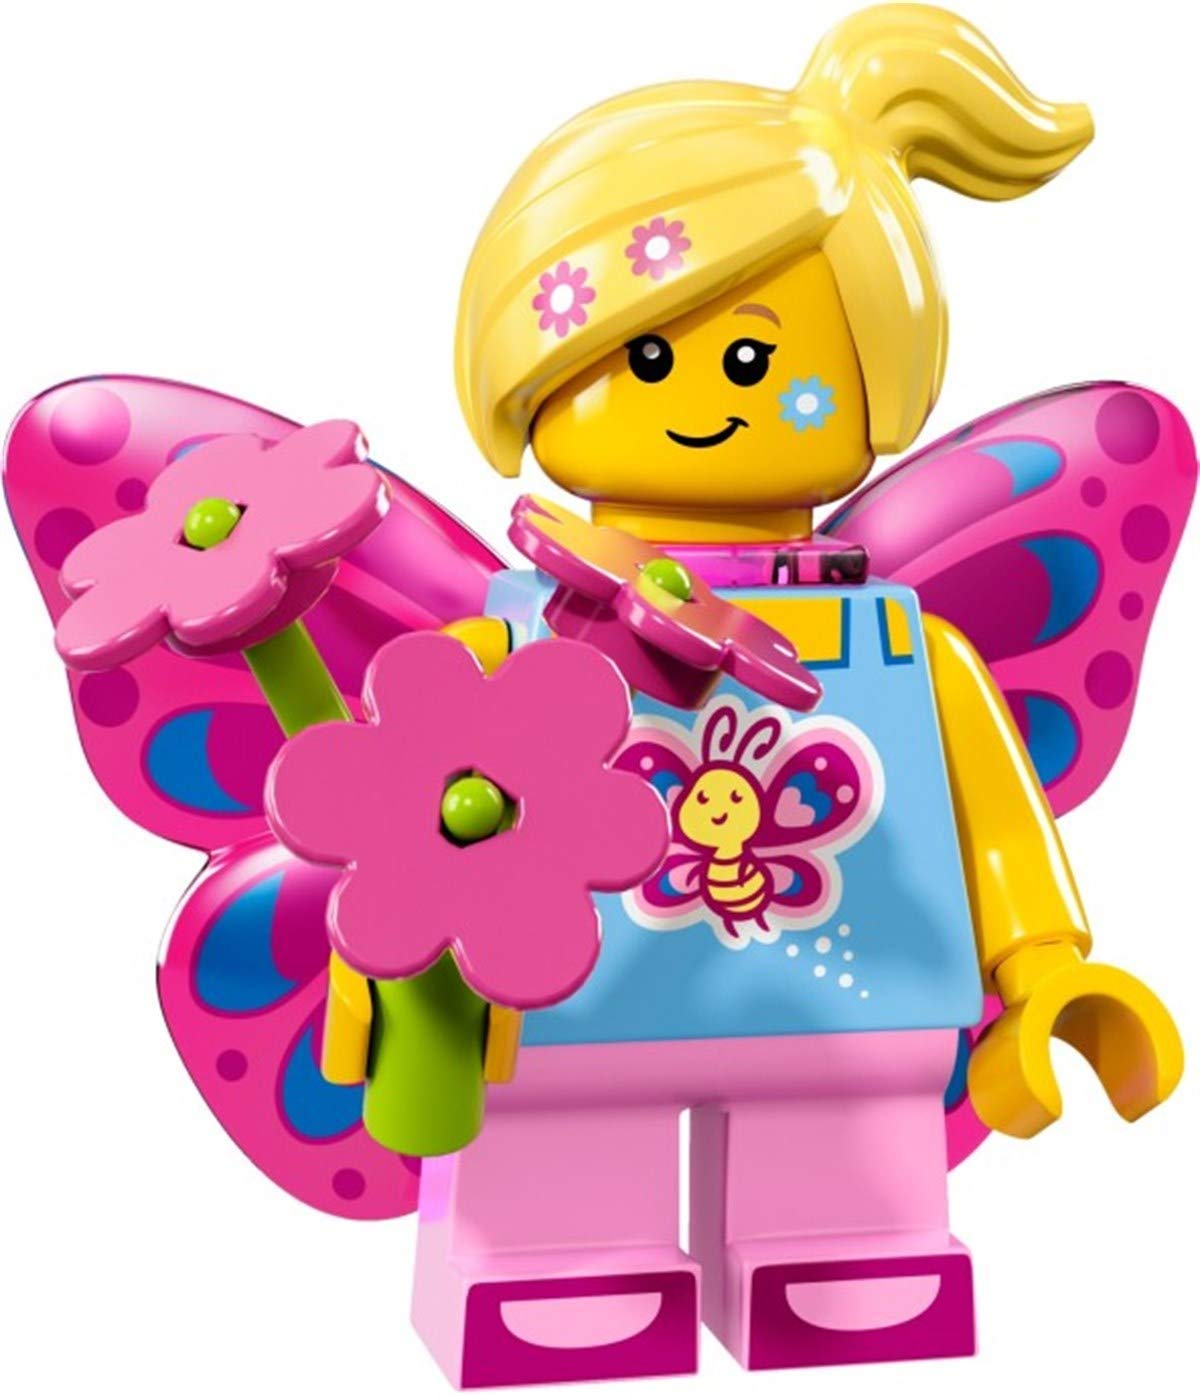 LEGO Minif igures Series 17 – # 7 Butterfly Girl Minif igure – (Bagged) 710